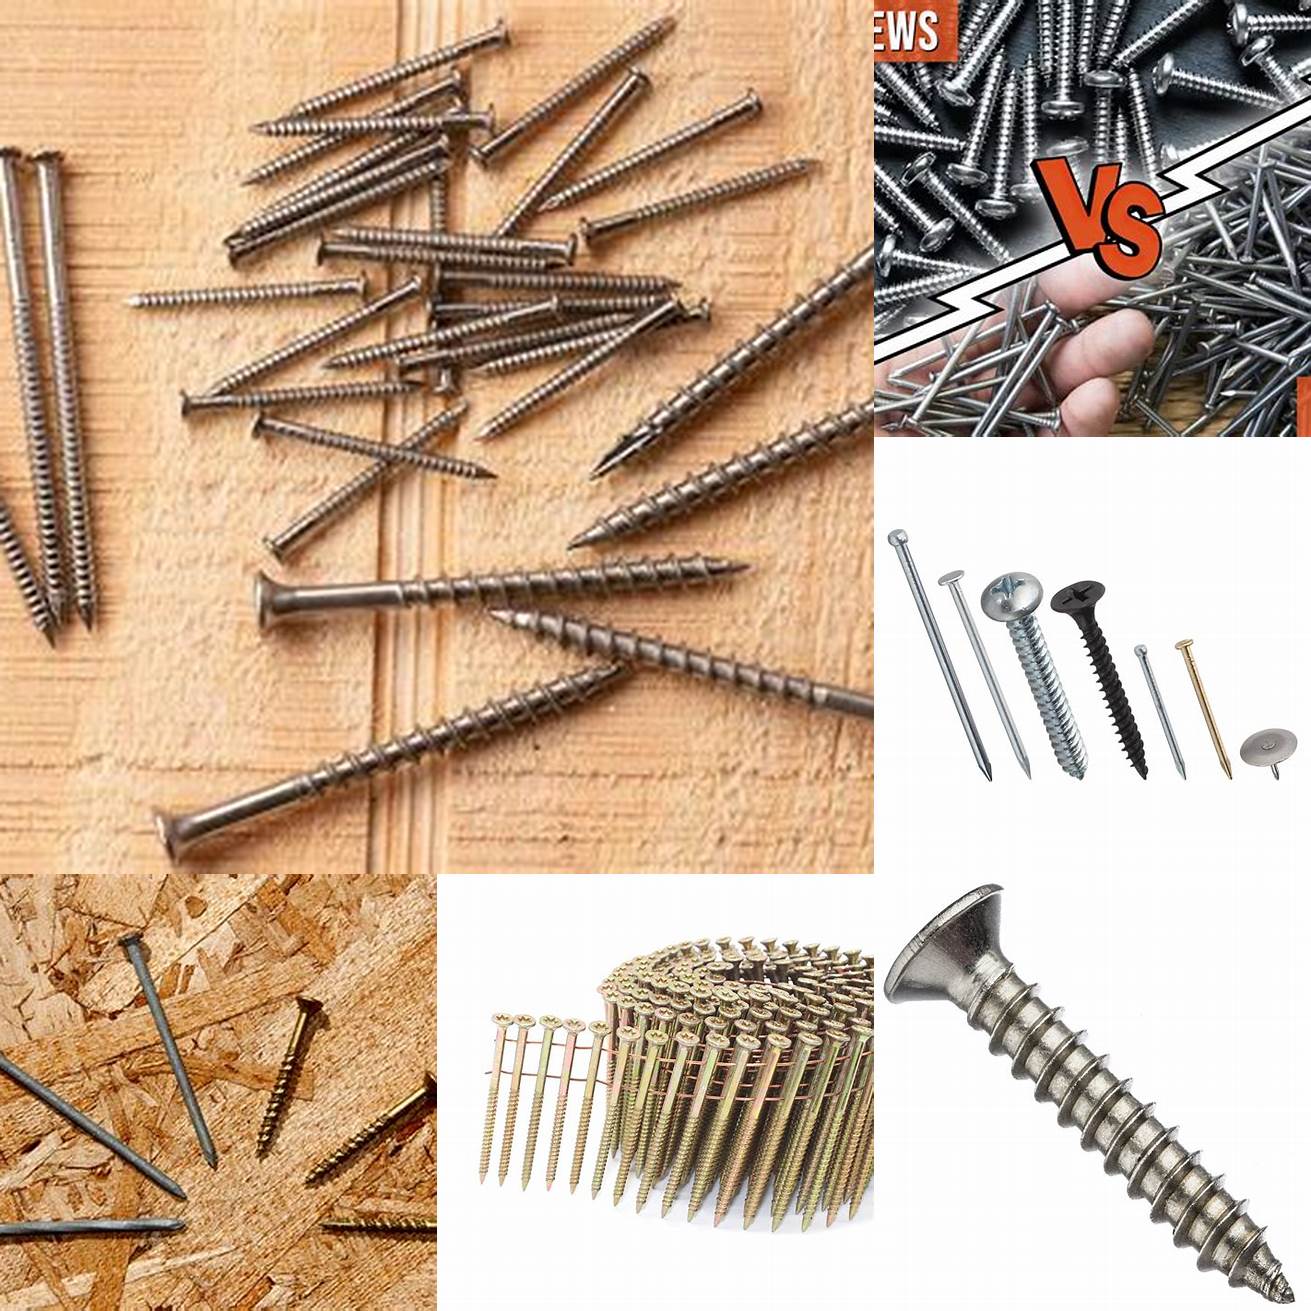 Screws or nails